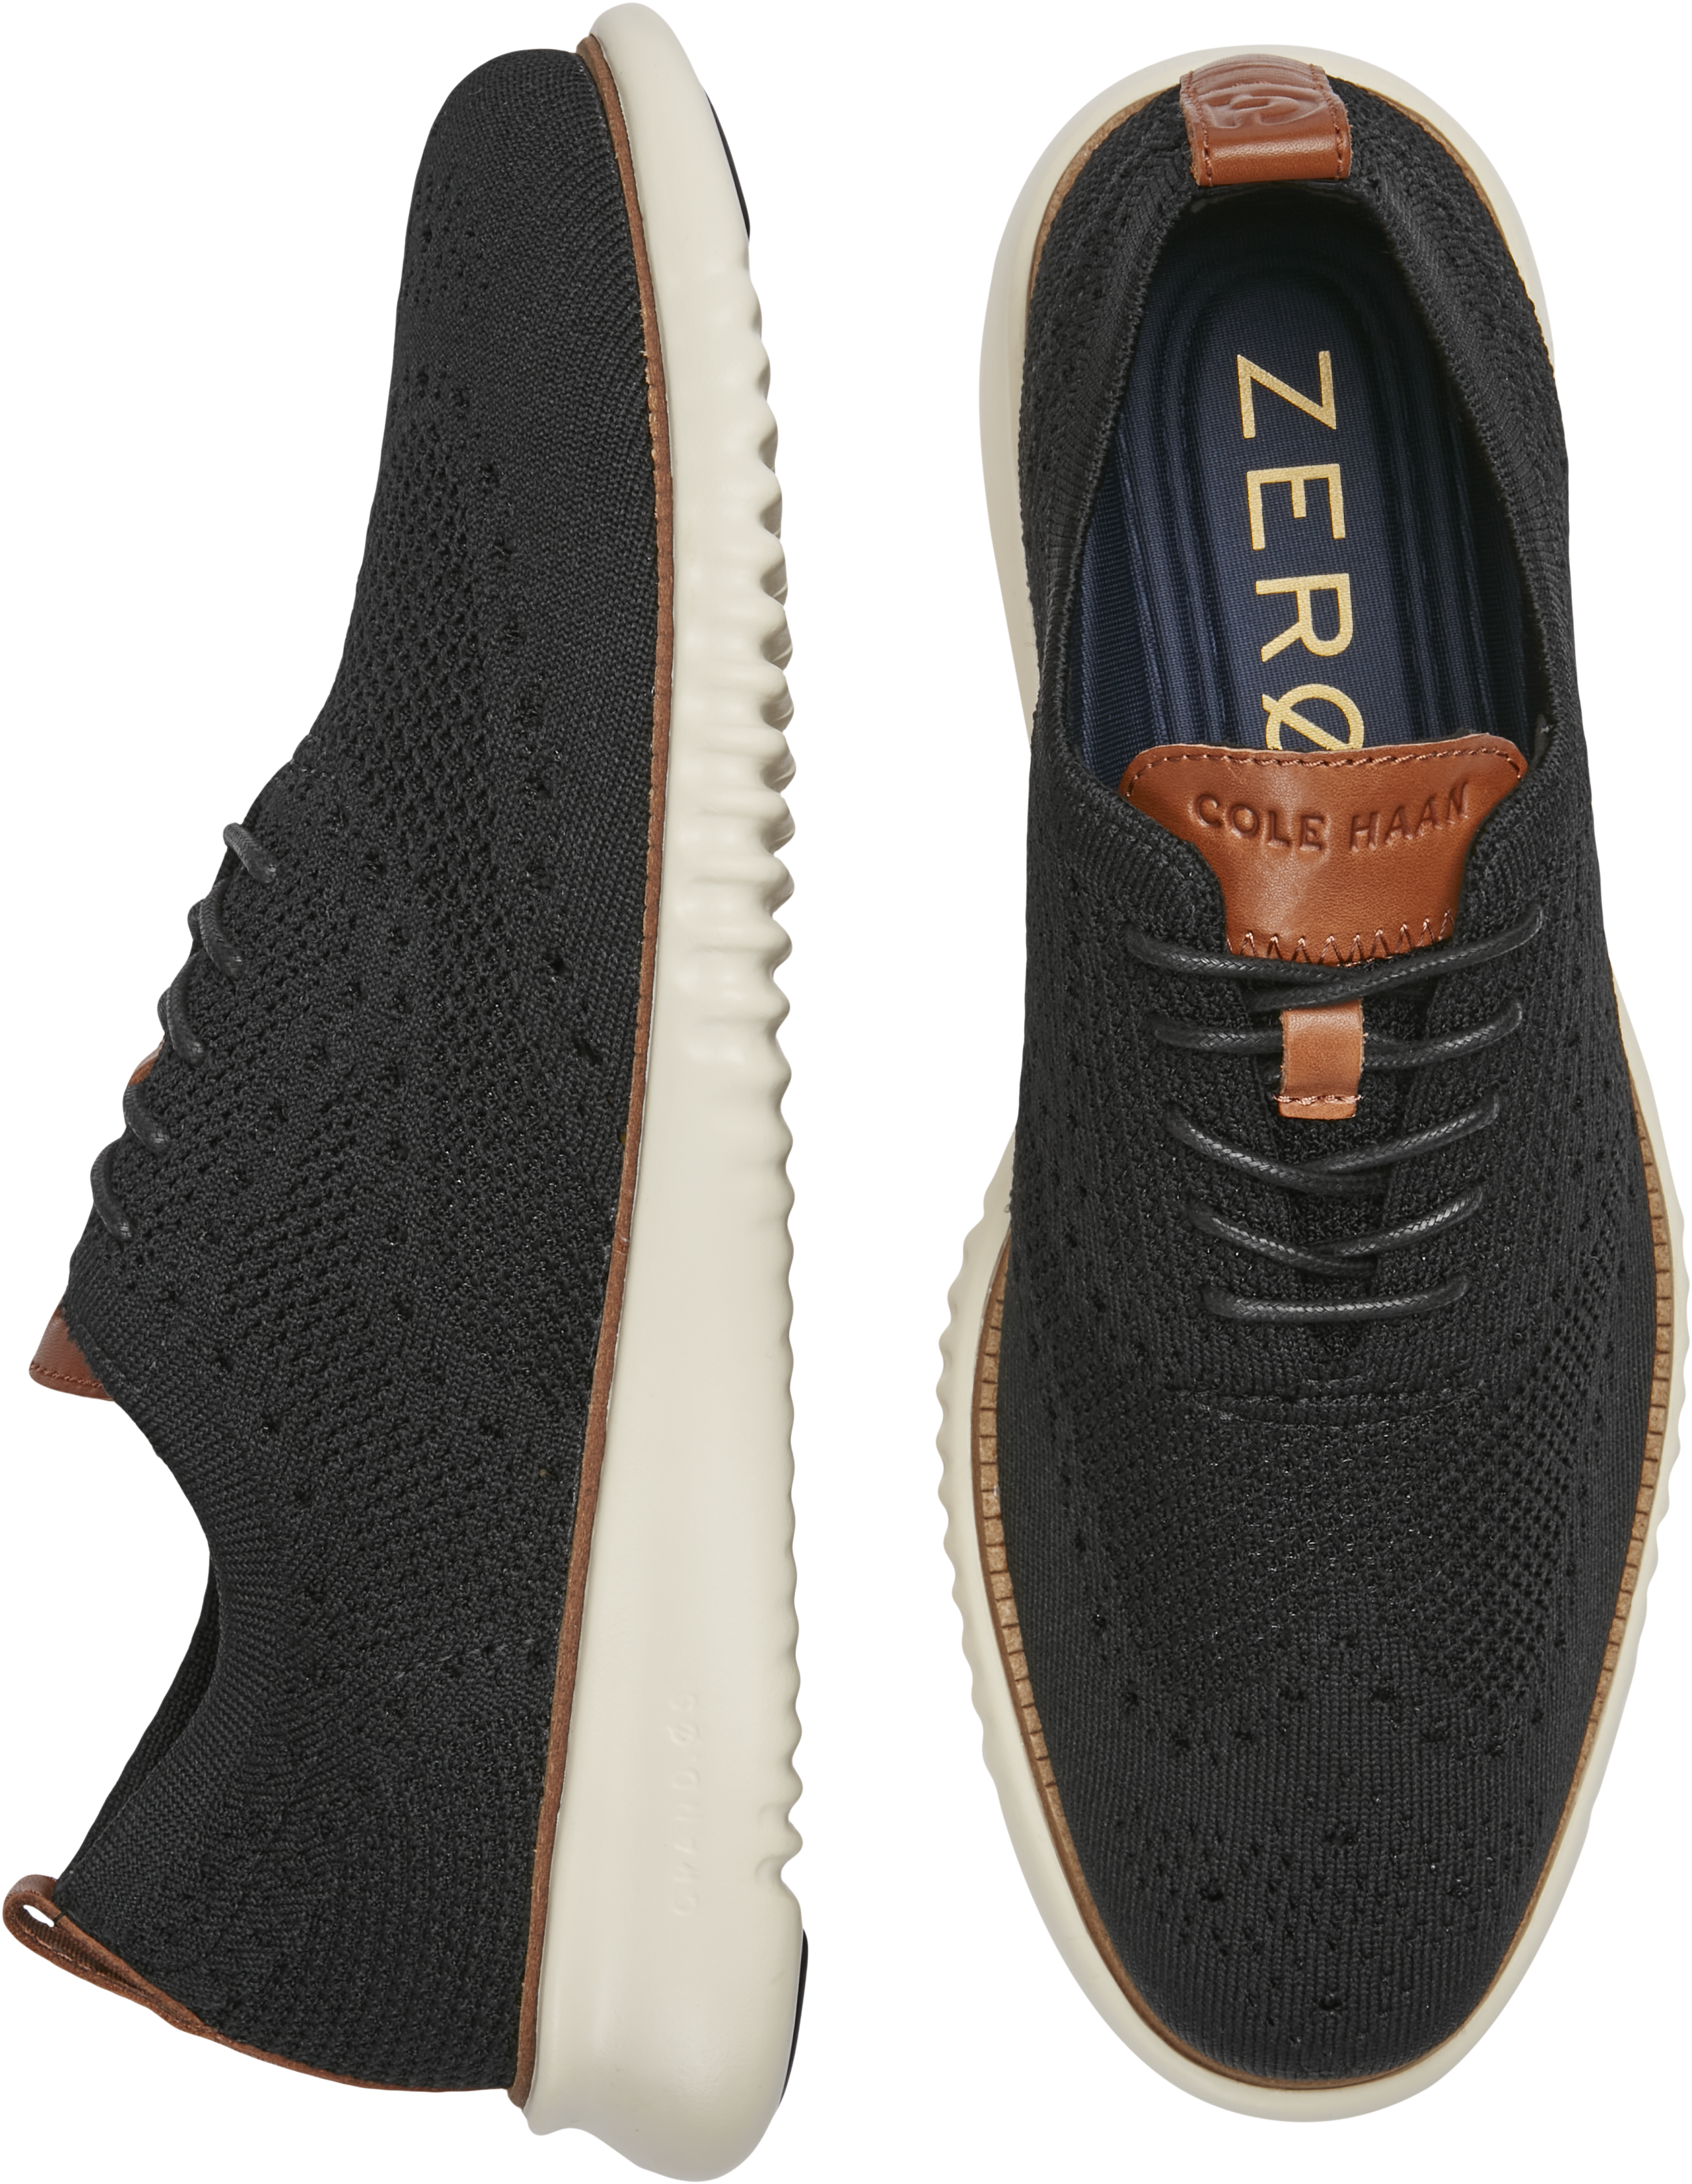 2.ZeroGrand Stitchlite Wingtip Oxford Dress Sneakers